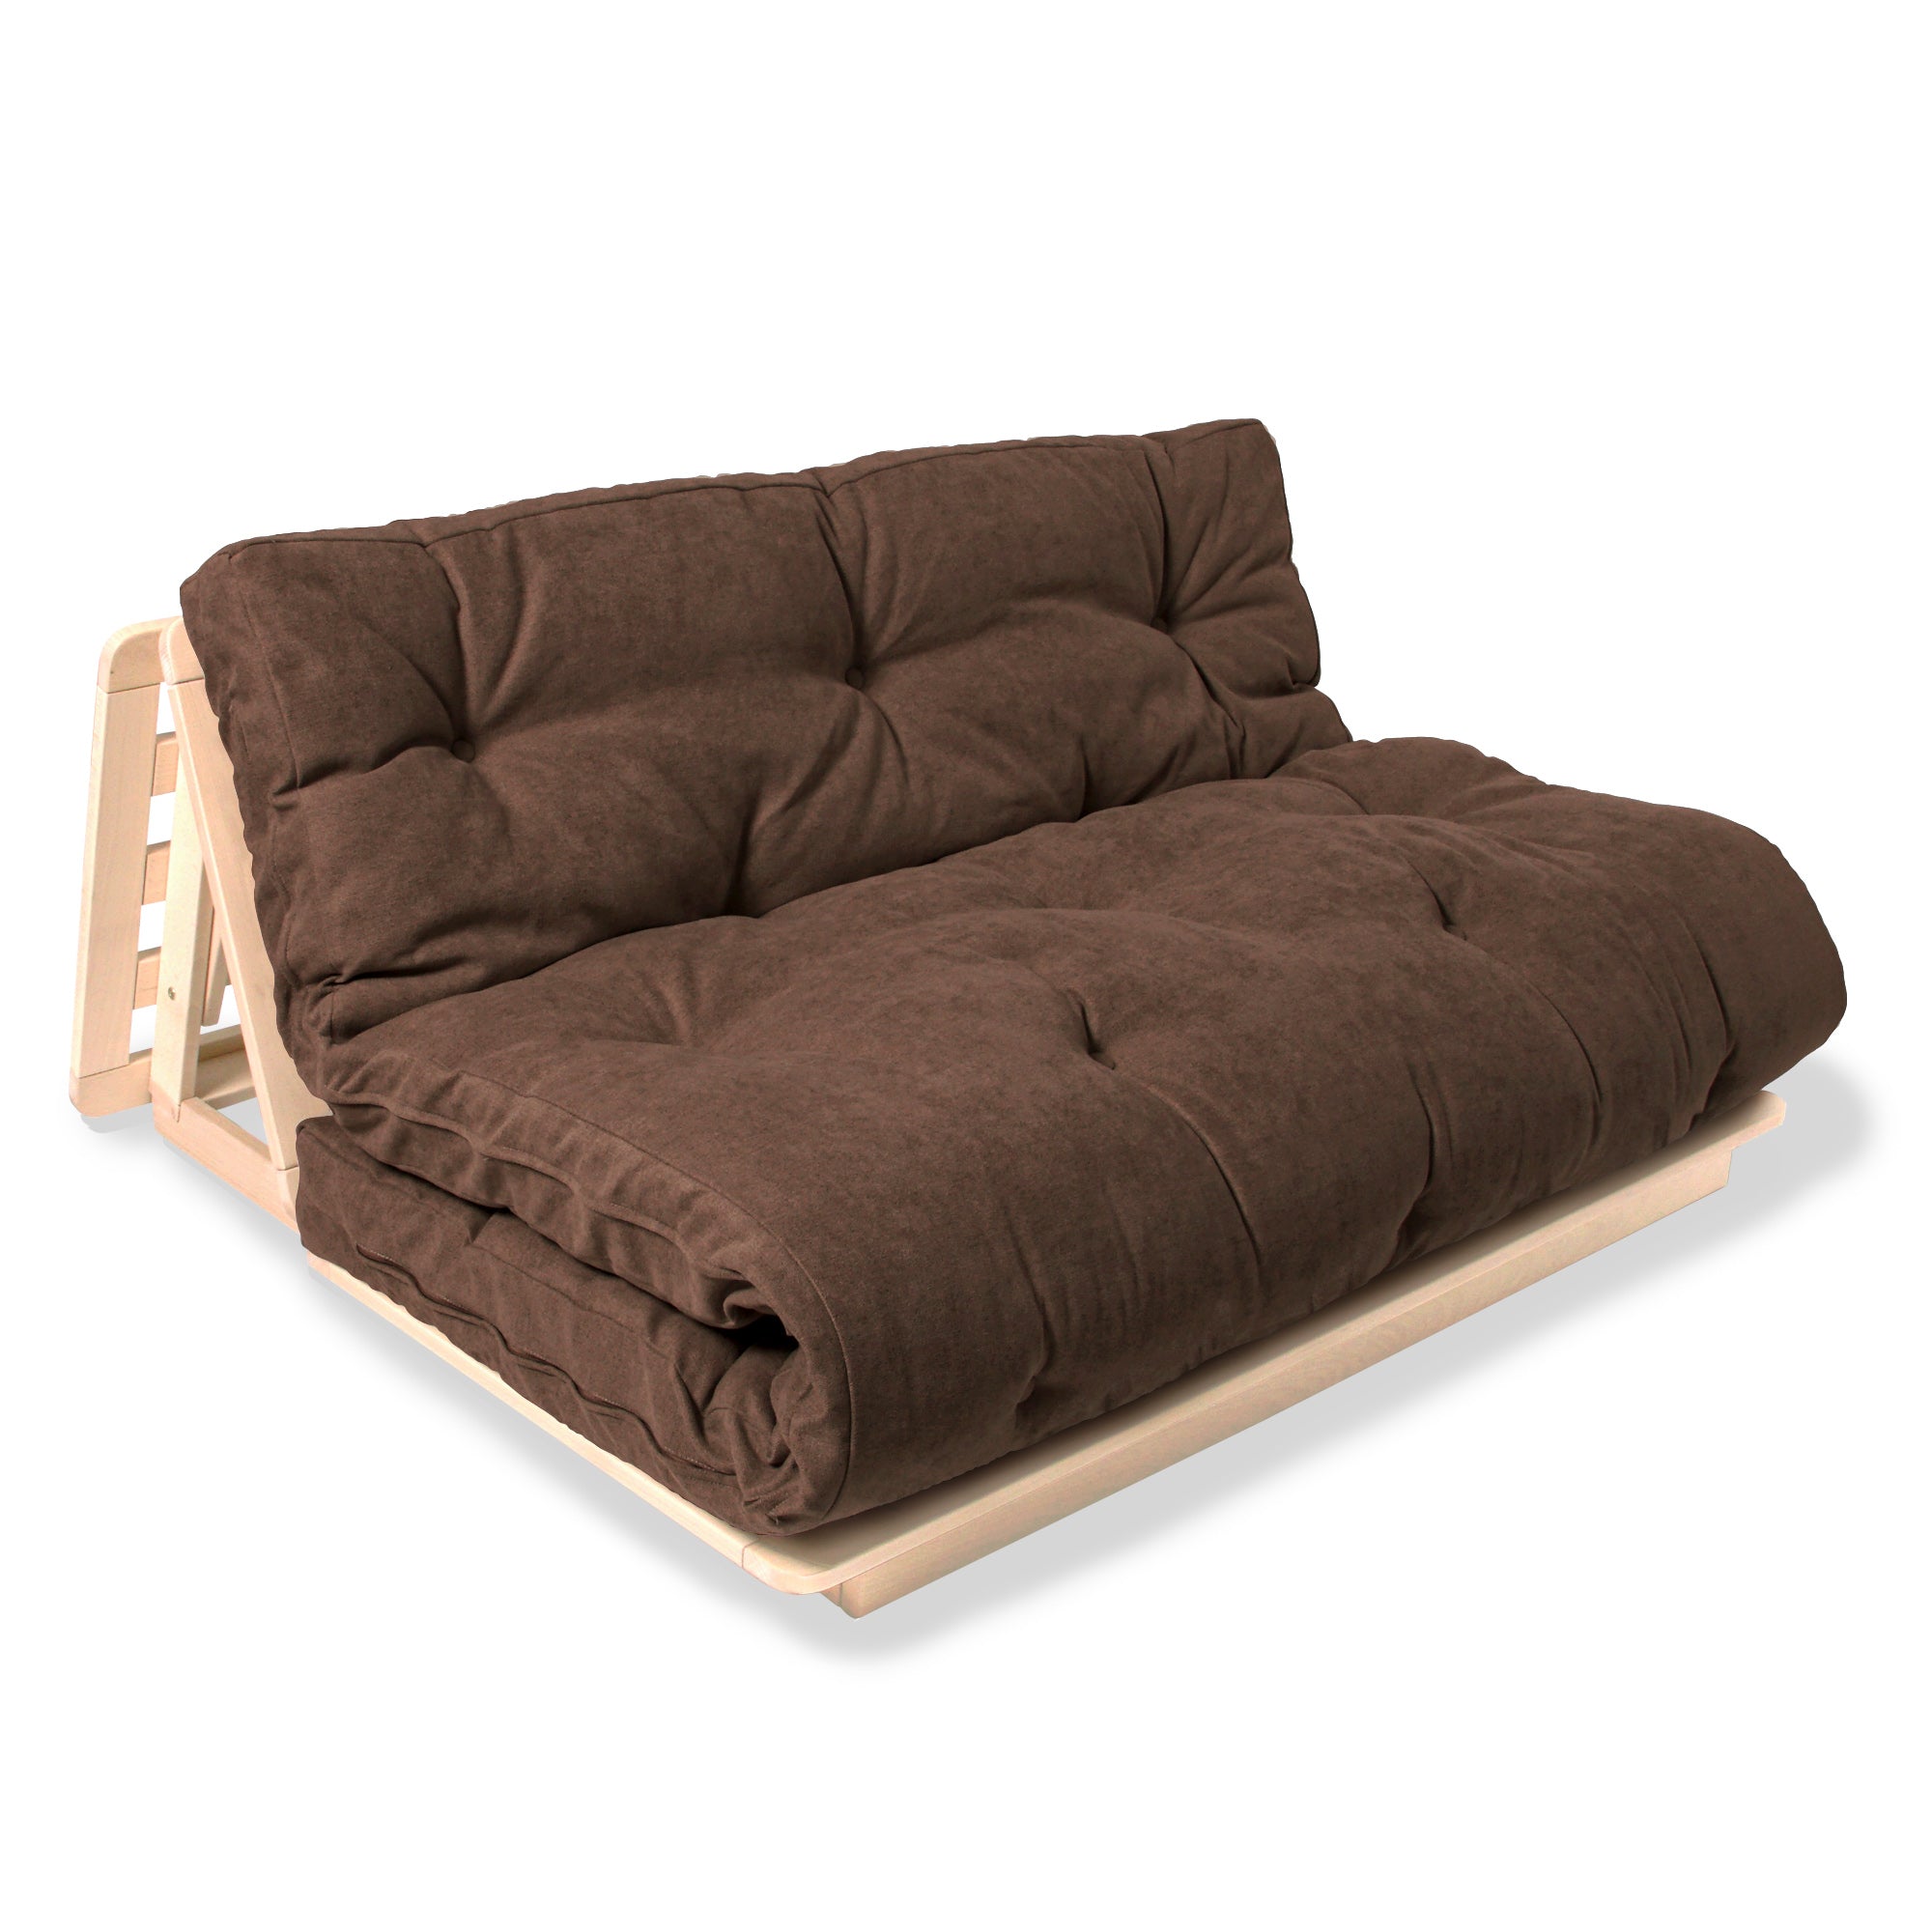 LAYTI-140 Futon Chair, Beech Wood, Natural Colour-brown fabric